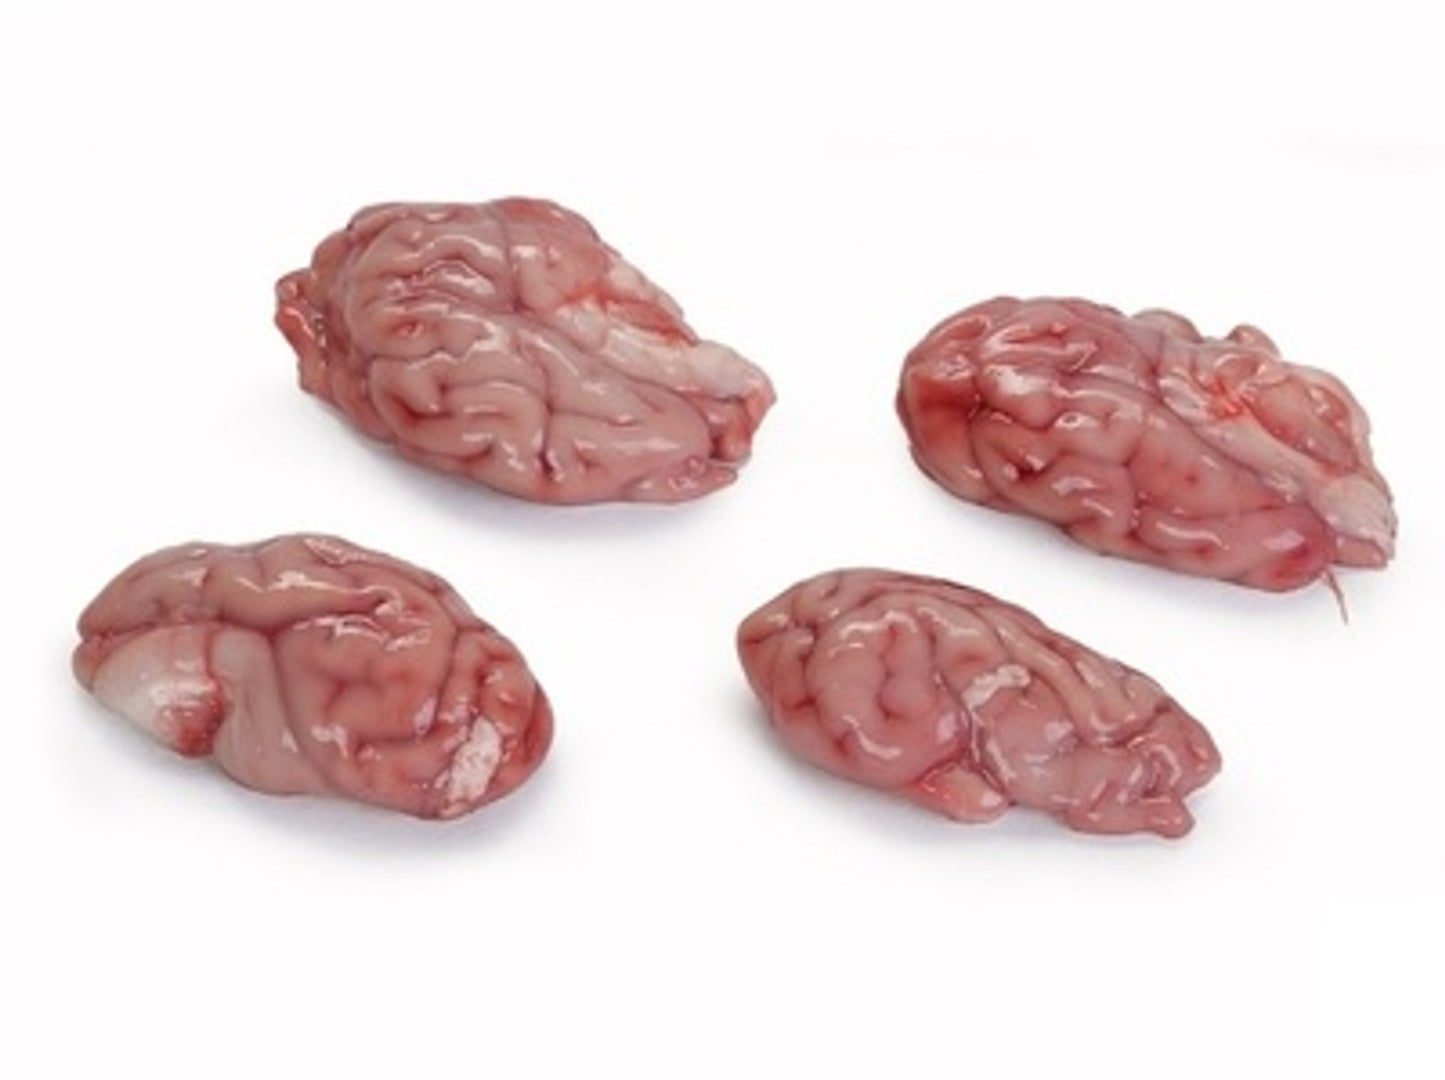 Pork Brains